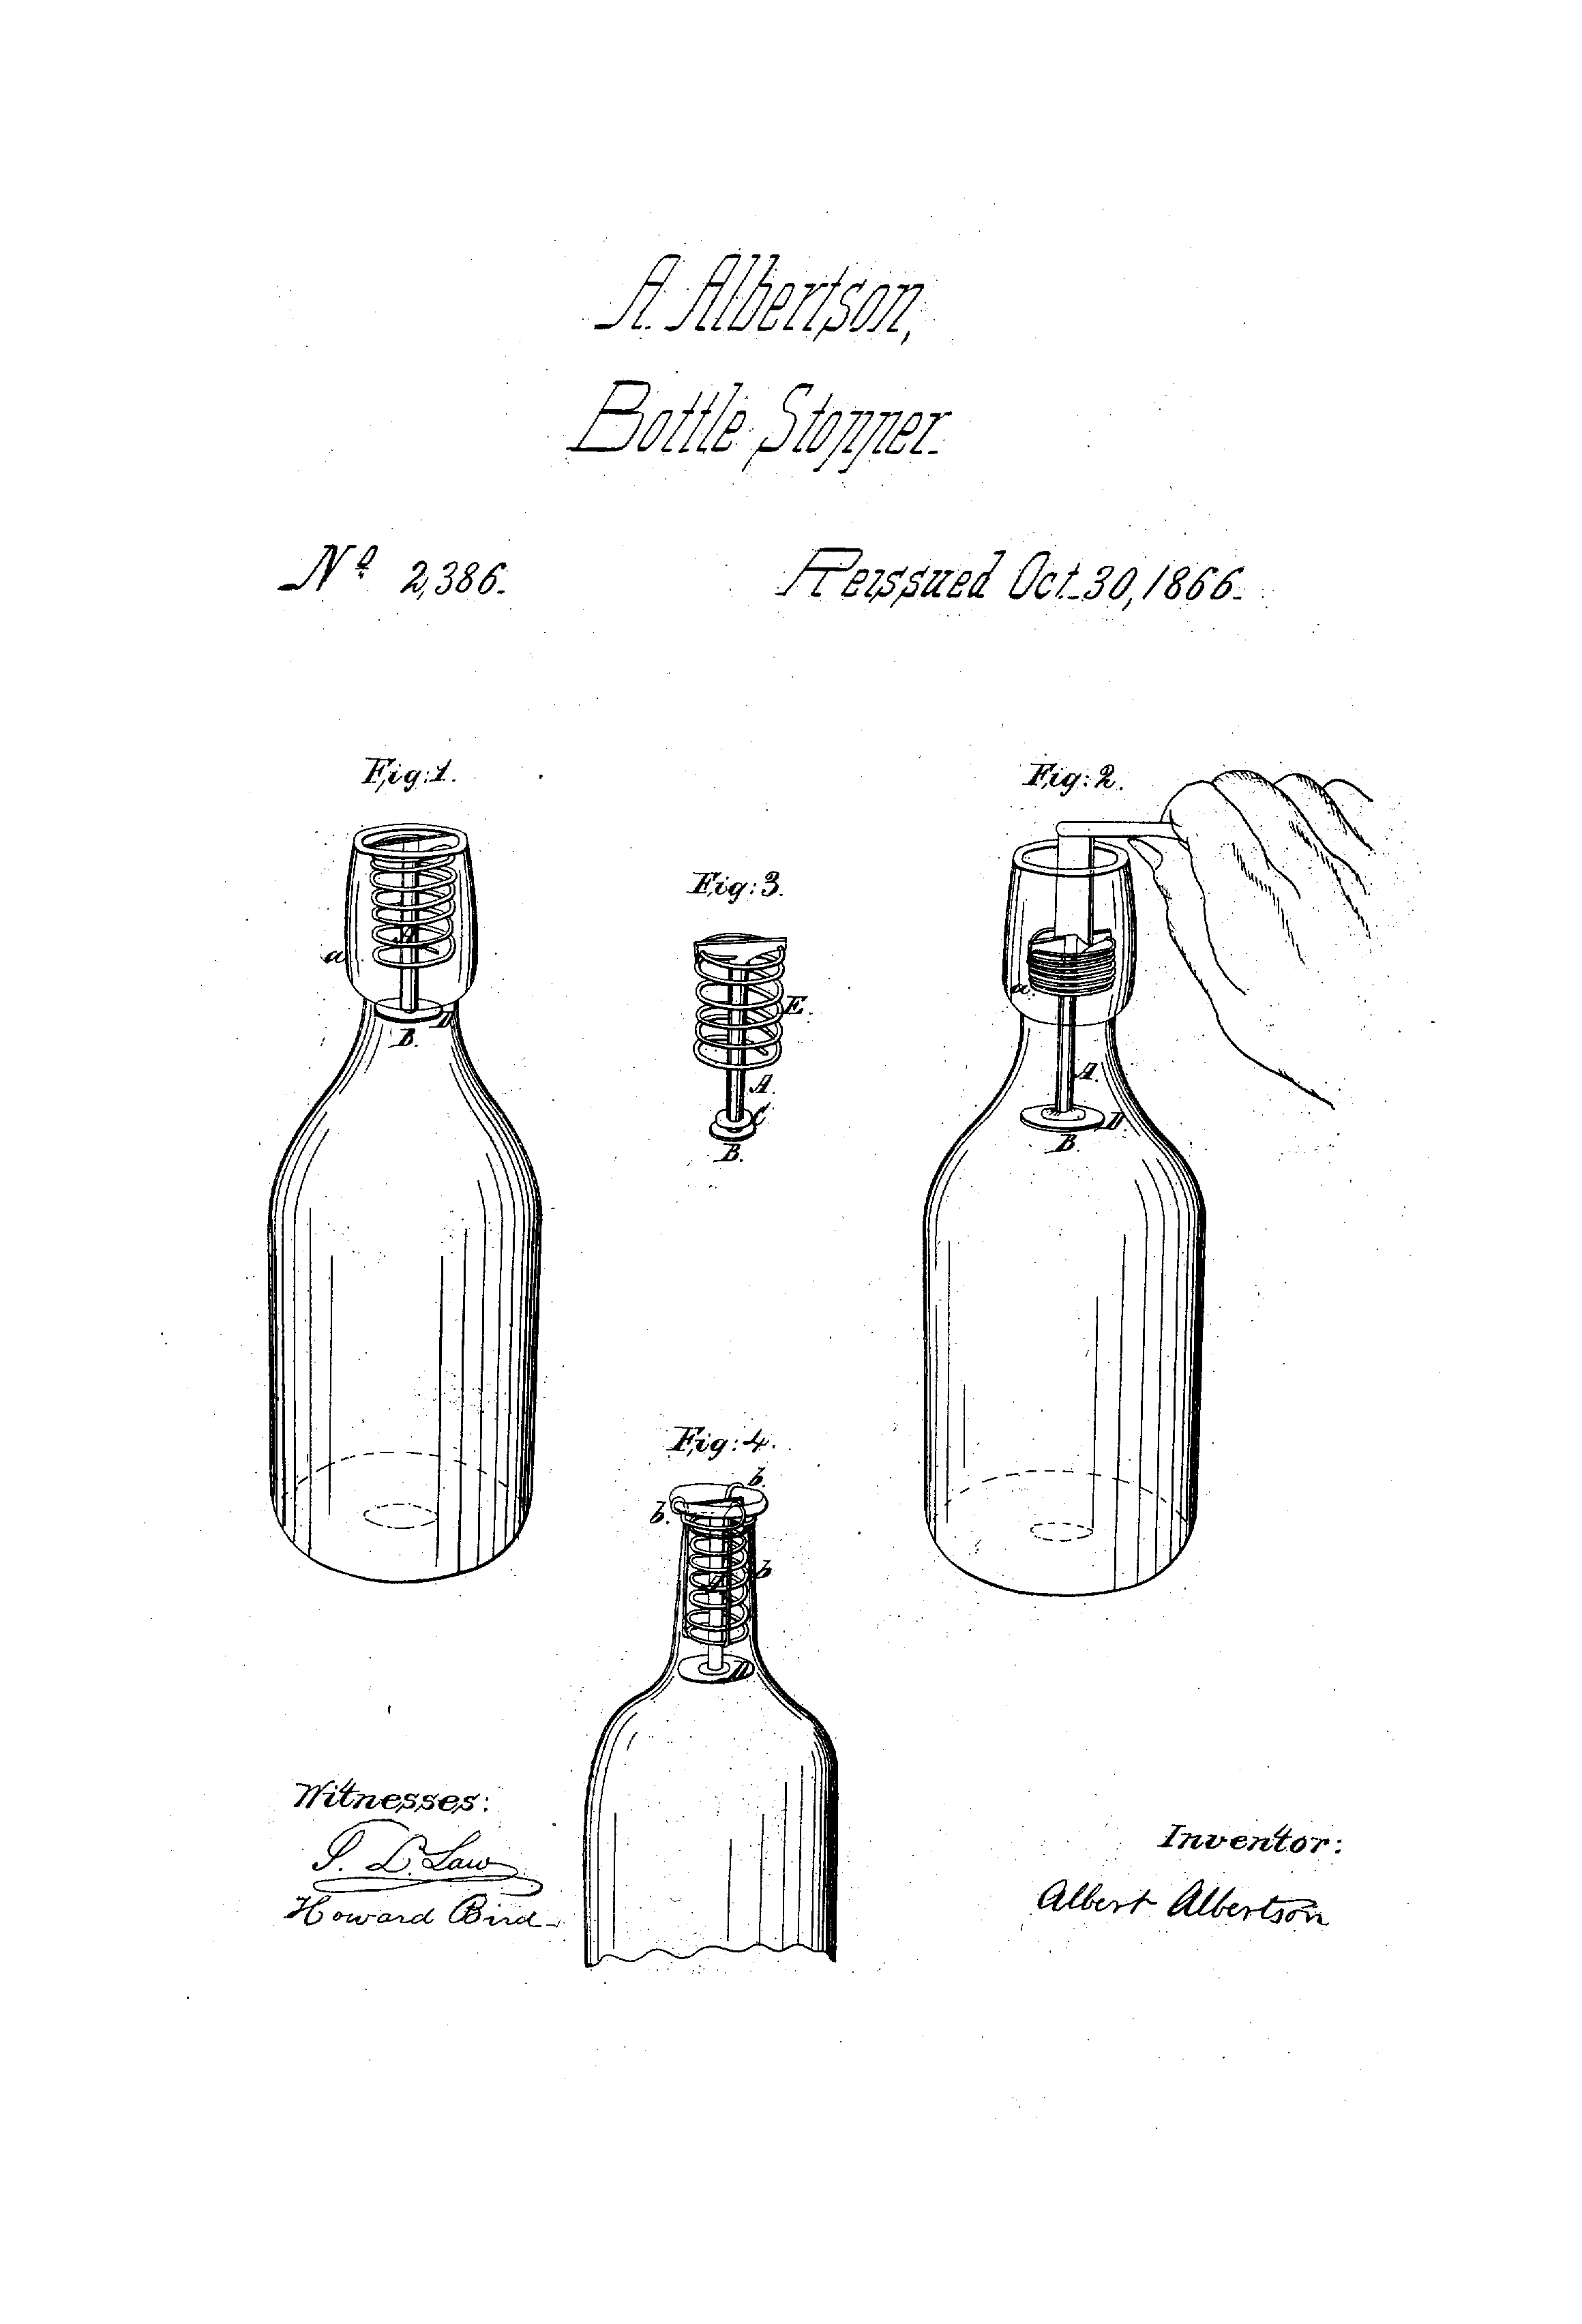 Reissued Patent 2,386